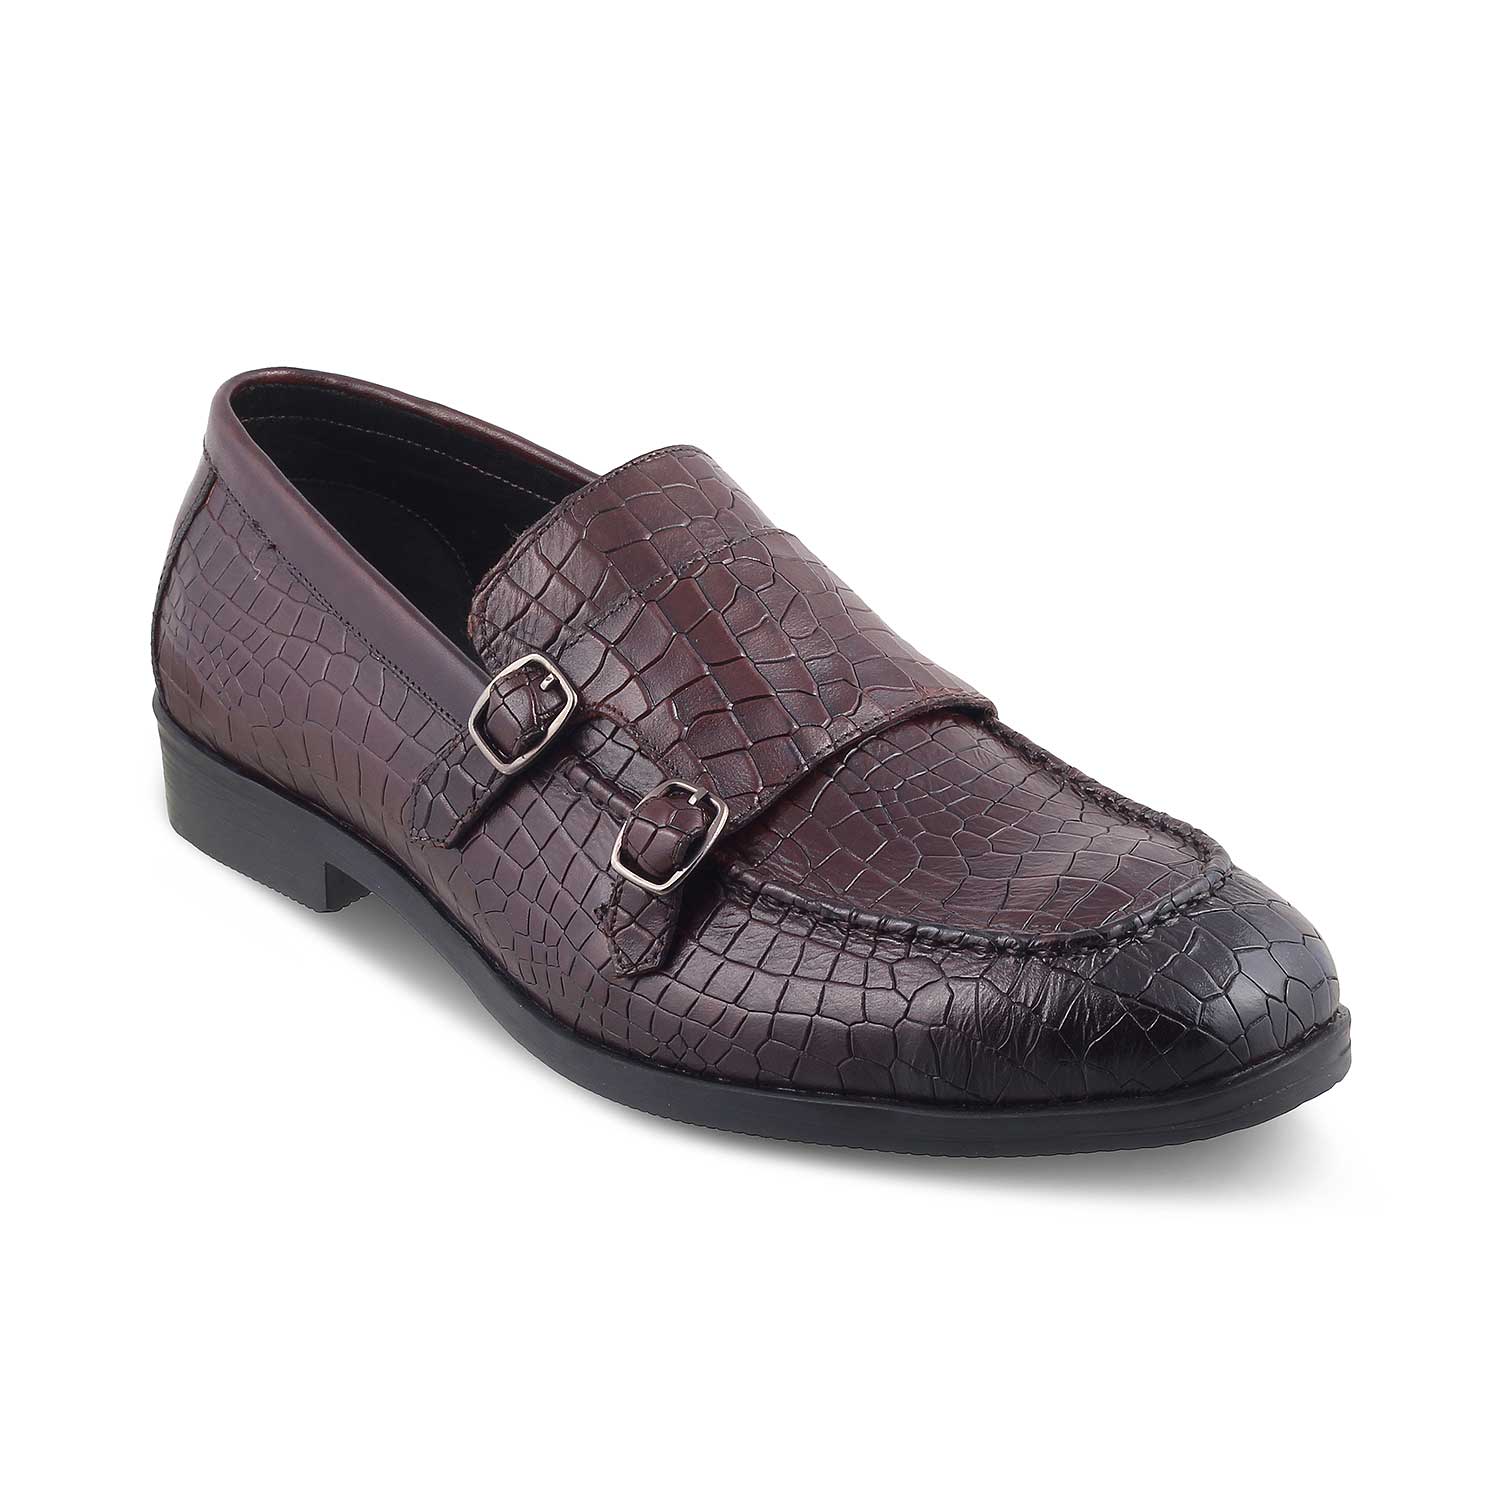 Cliz Brown Men's Double Monk Shoes Online at Tresmode.com